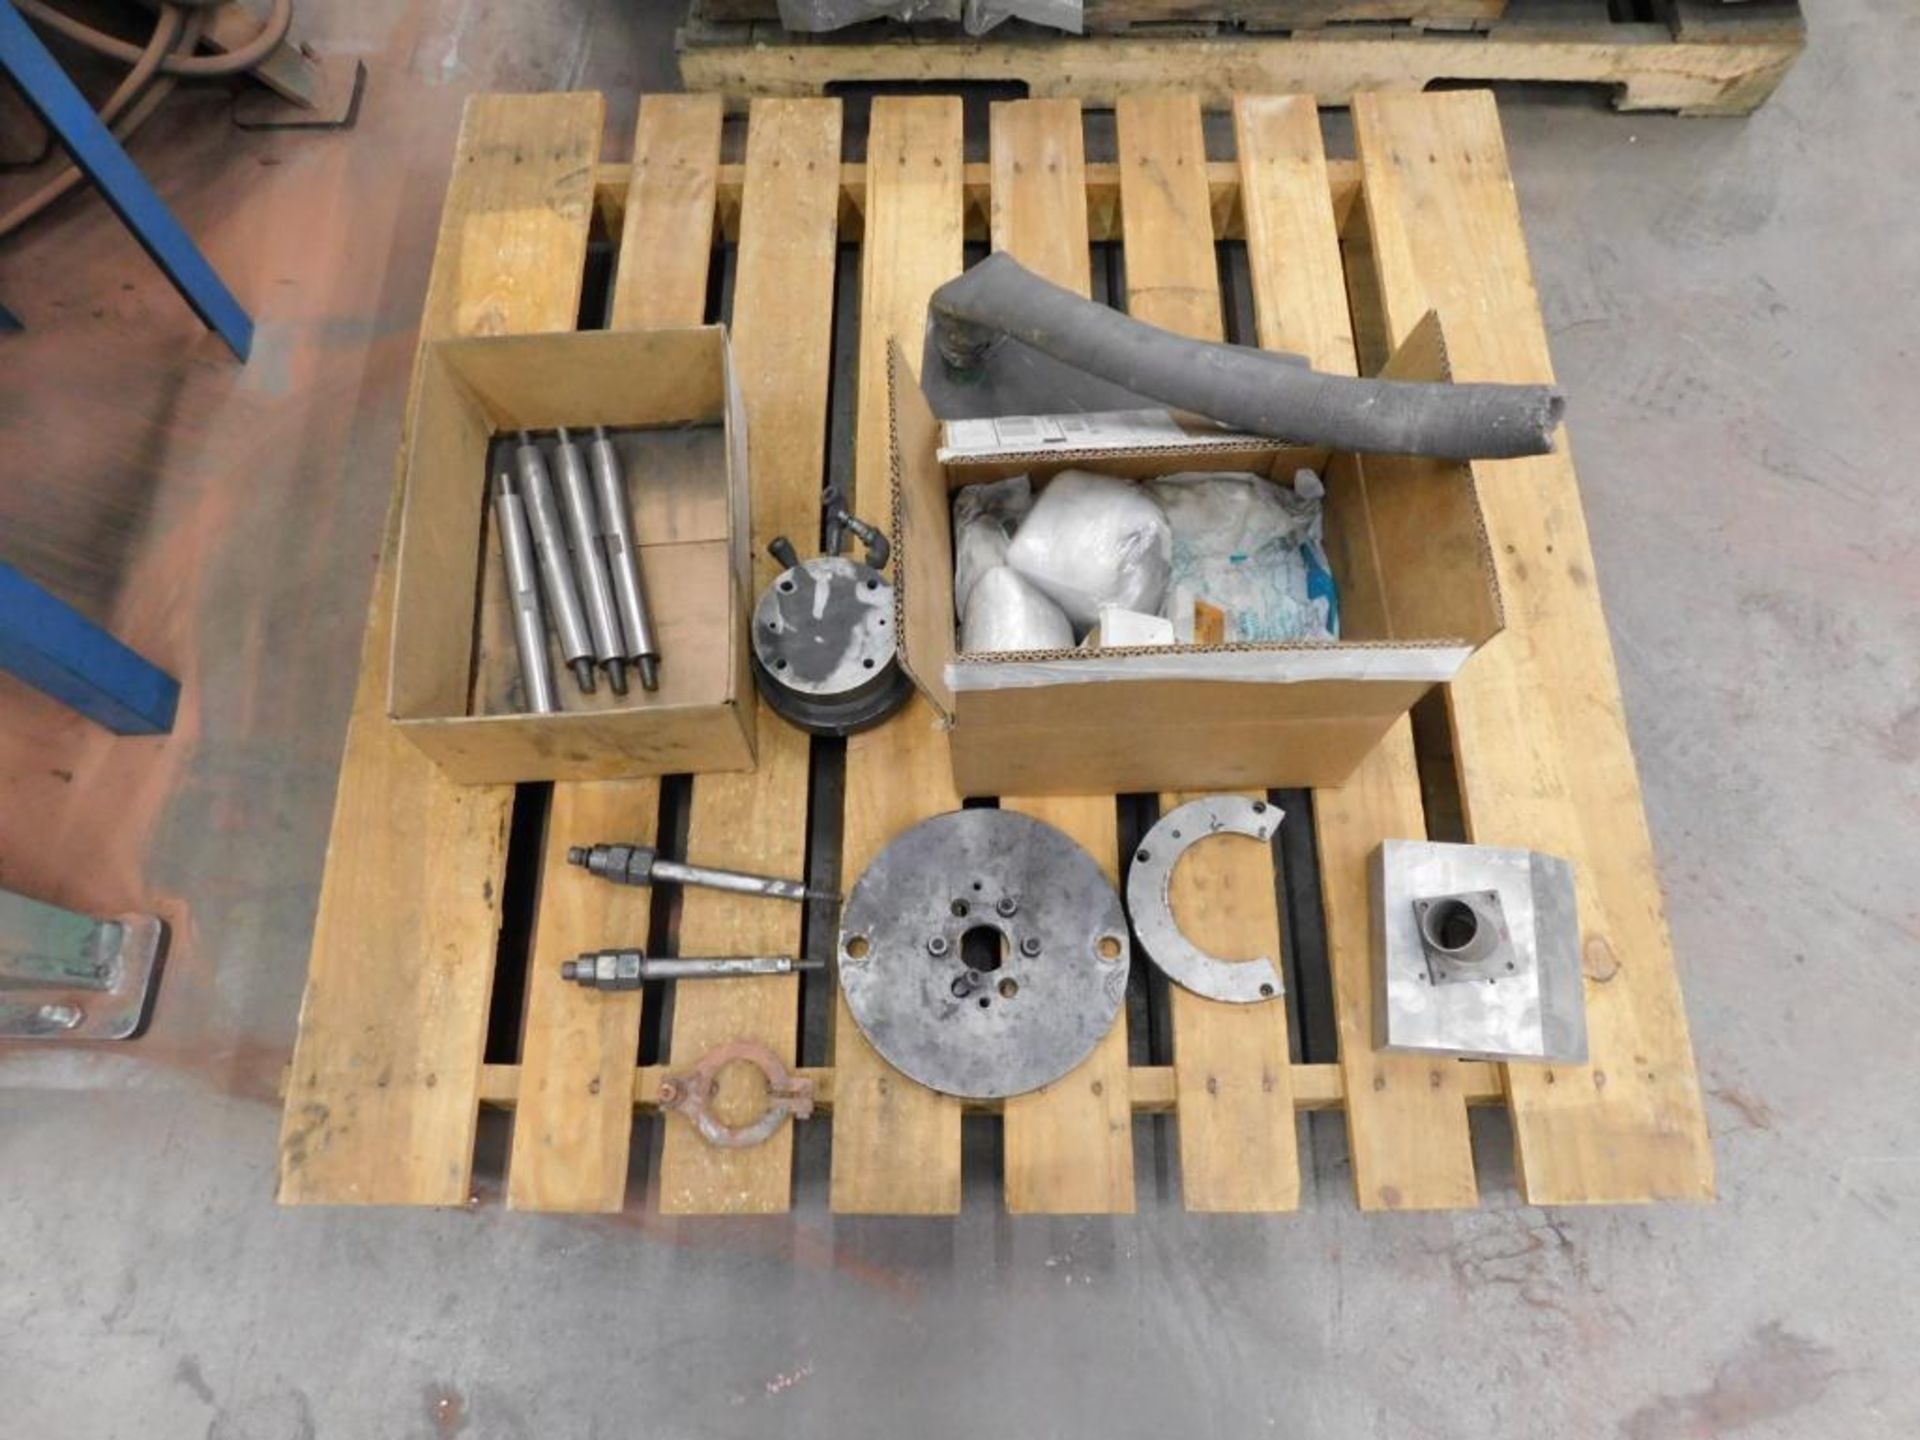 Gasbarre Powder Compacting Press, Mechanical, Model 30 Standard, S/N: 86256, 30 Ton Maximum Pressing - Image 19 of 22